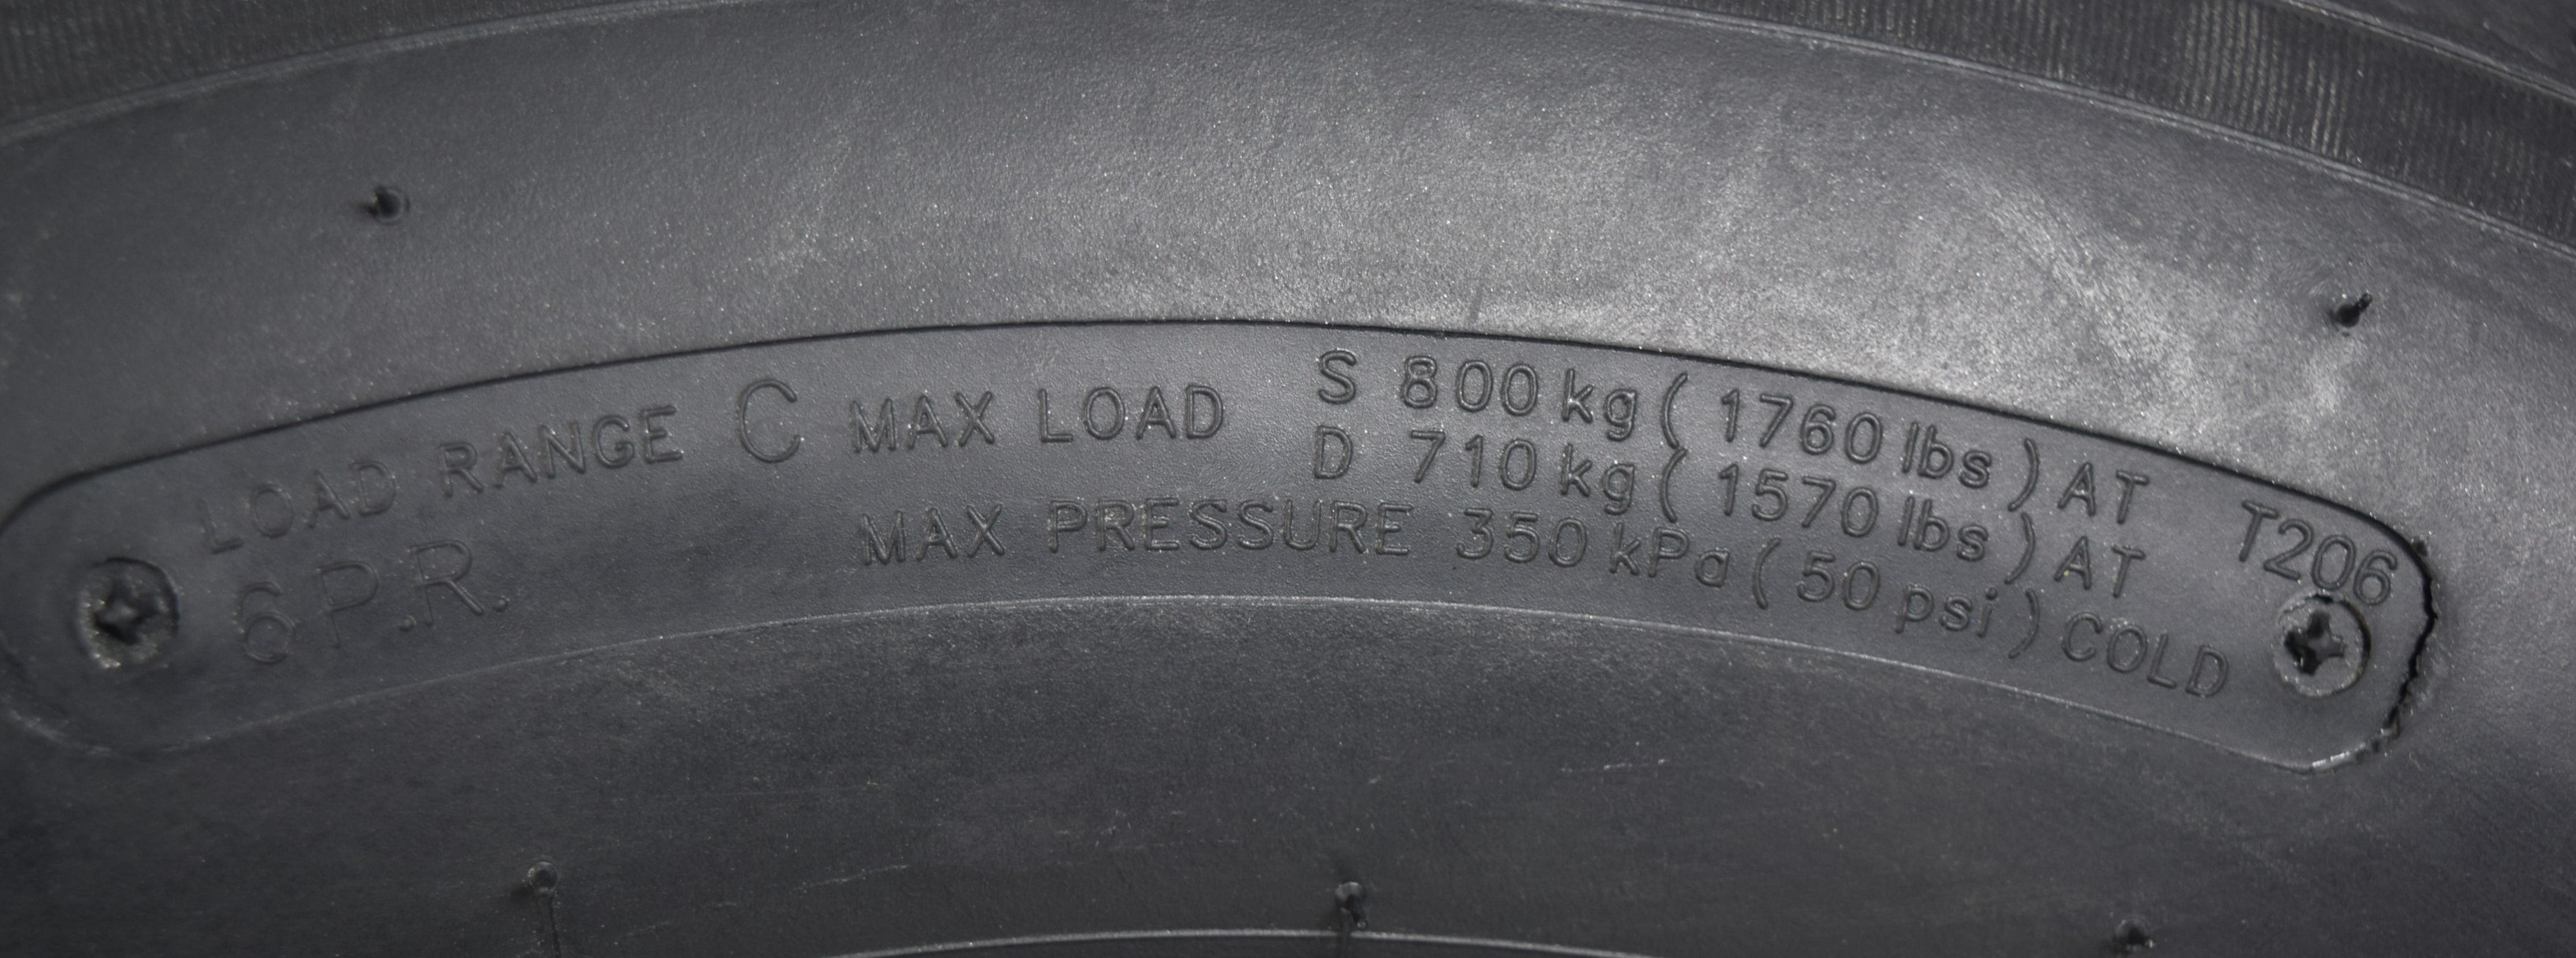 Kenda 32032005 ST205/75D14 Load Star 6 Ply Tubeless Trailer Tire